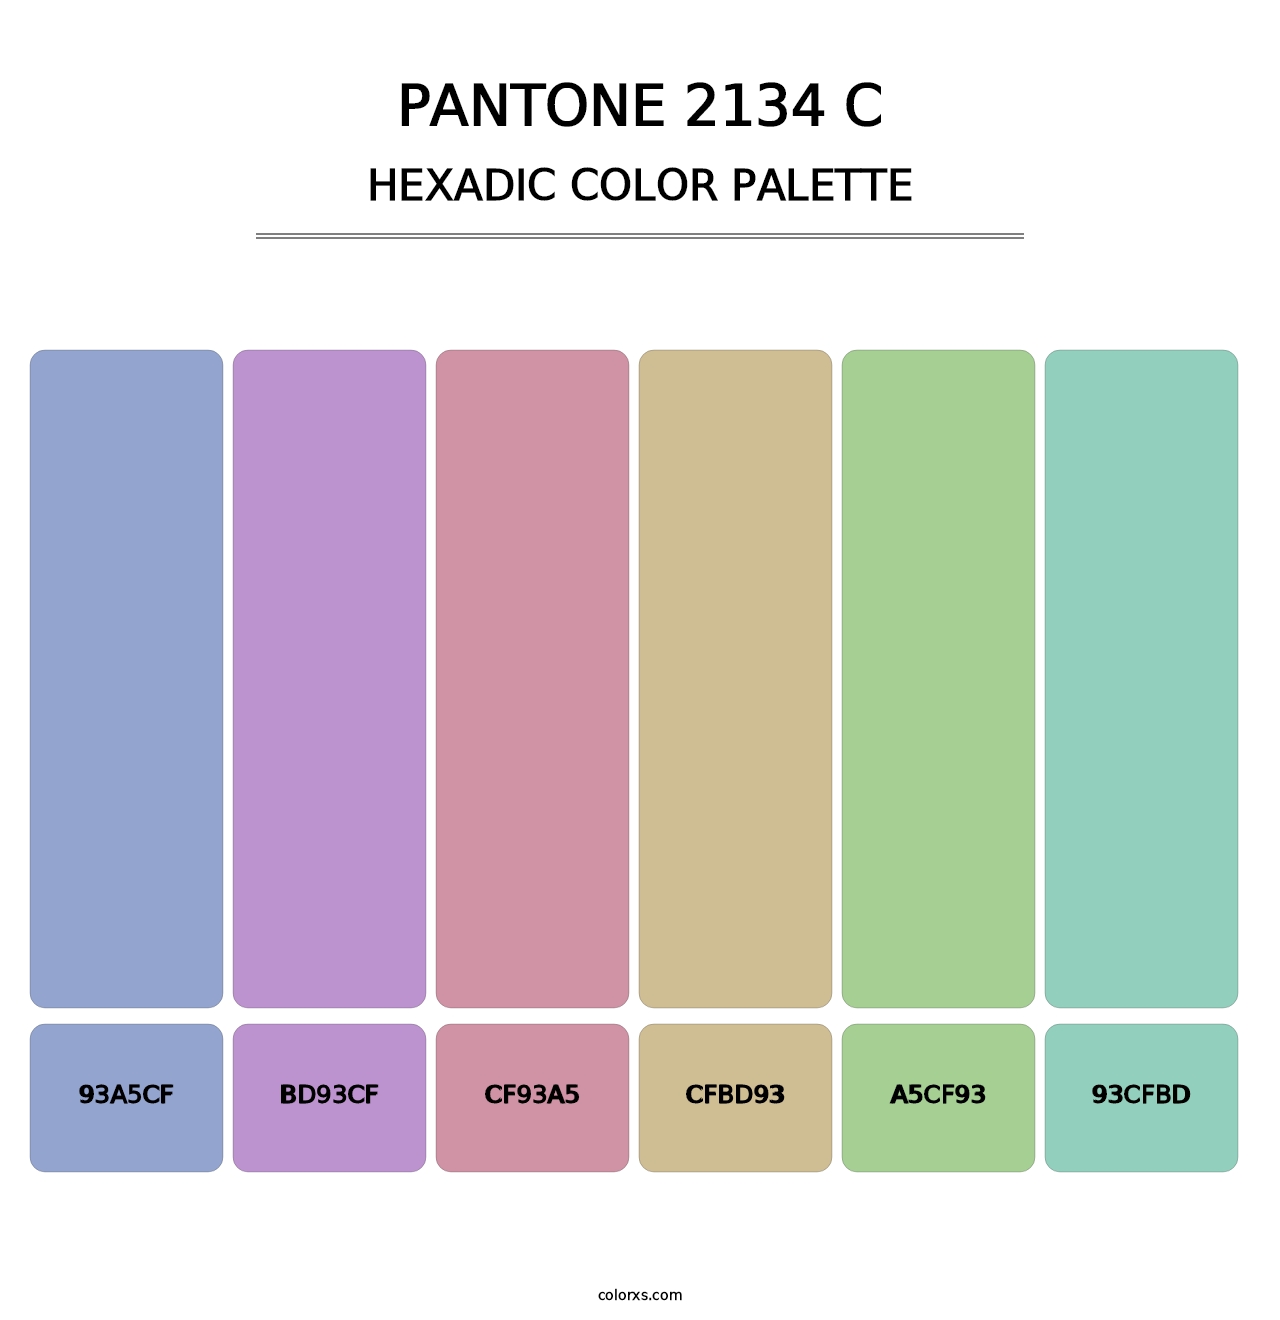 PANTONE 2134 C - Hexadic Color Palette